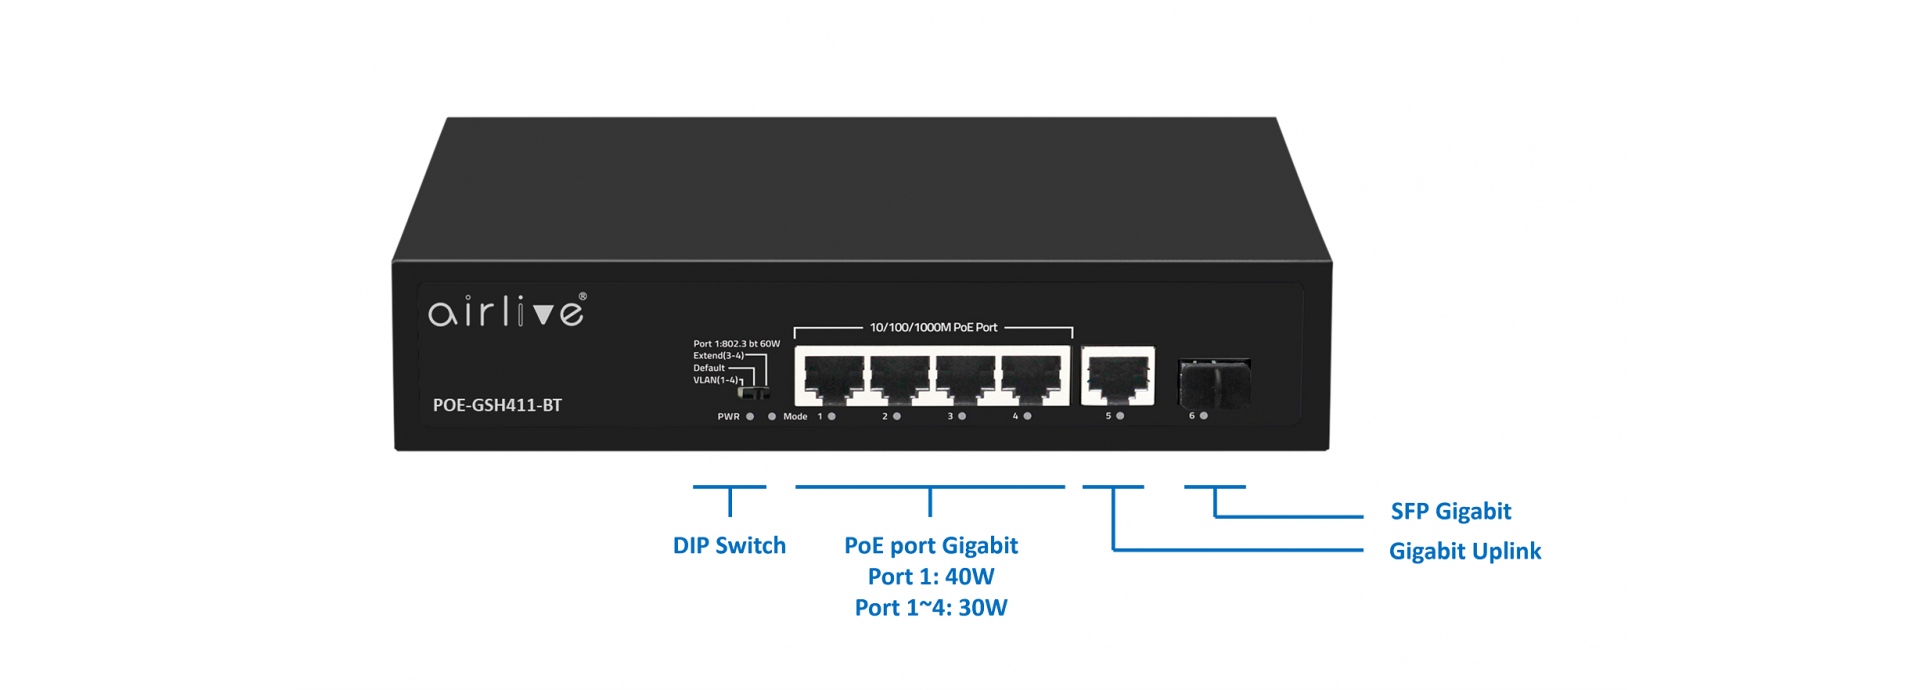 6-Port Gigabit PoE+ Switch with VLAN and SFP/RJ-45 port